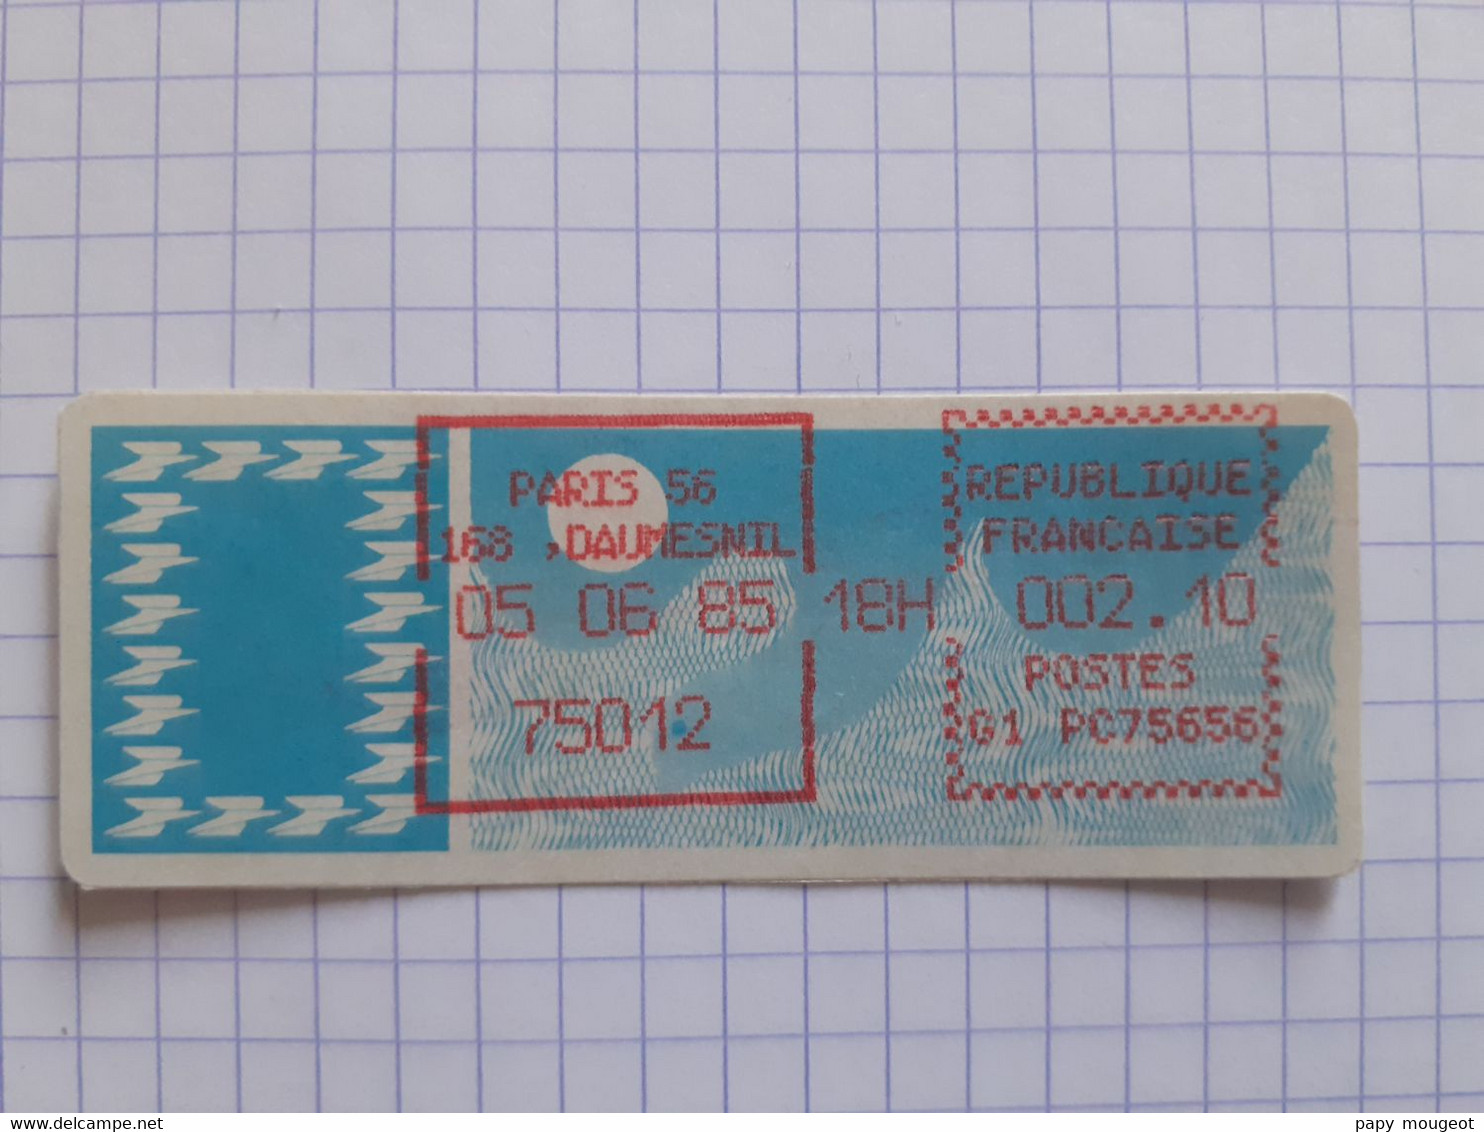 Paris 56 168, Daumesnil 75012 - 05-06-85 - G1 PC75656 Tarif 2.10 - 1985 « Carrier » Papier